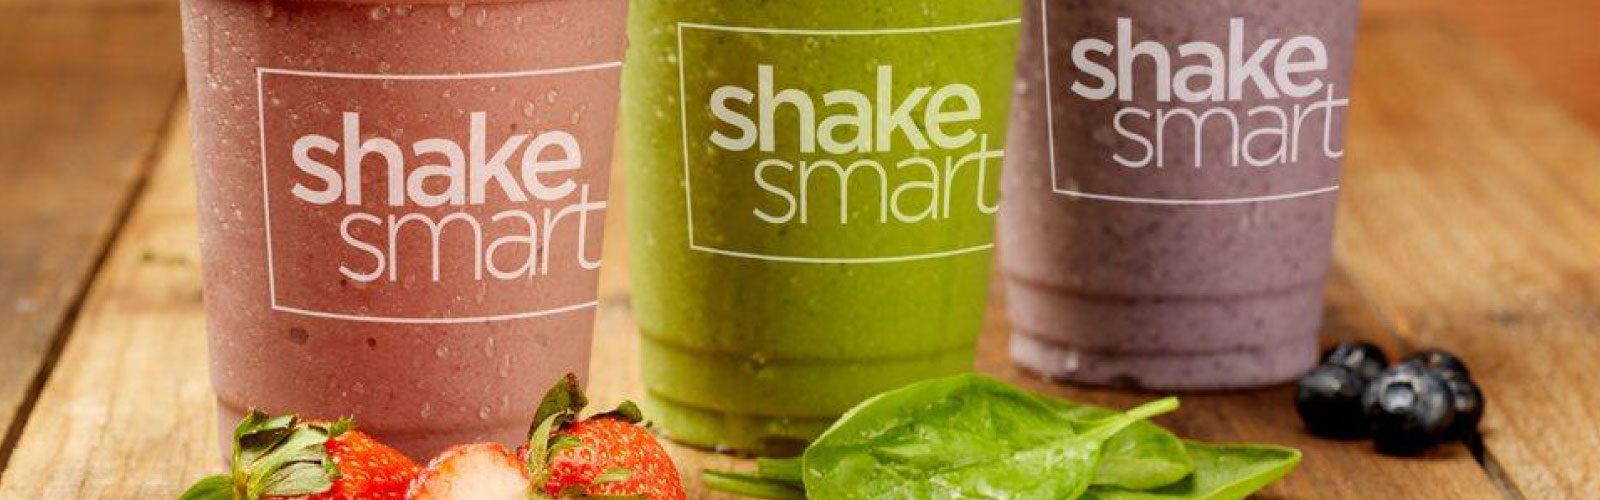 shake smart smoothies